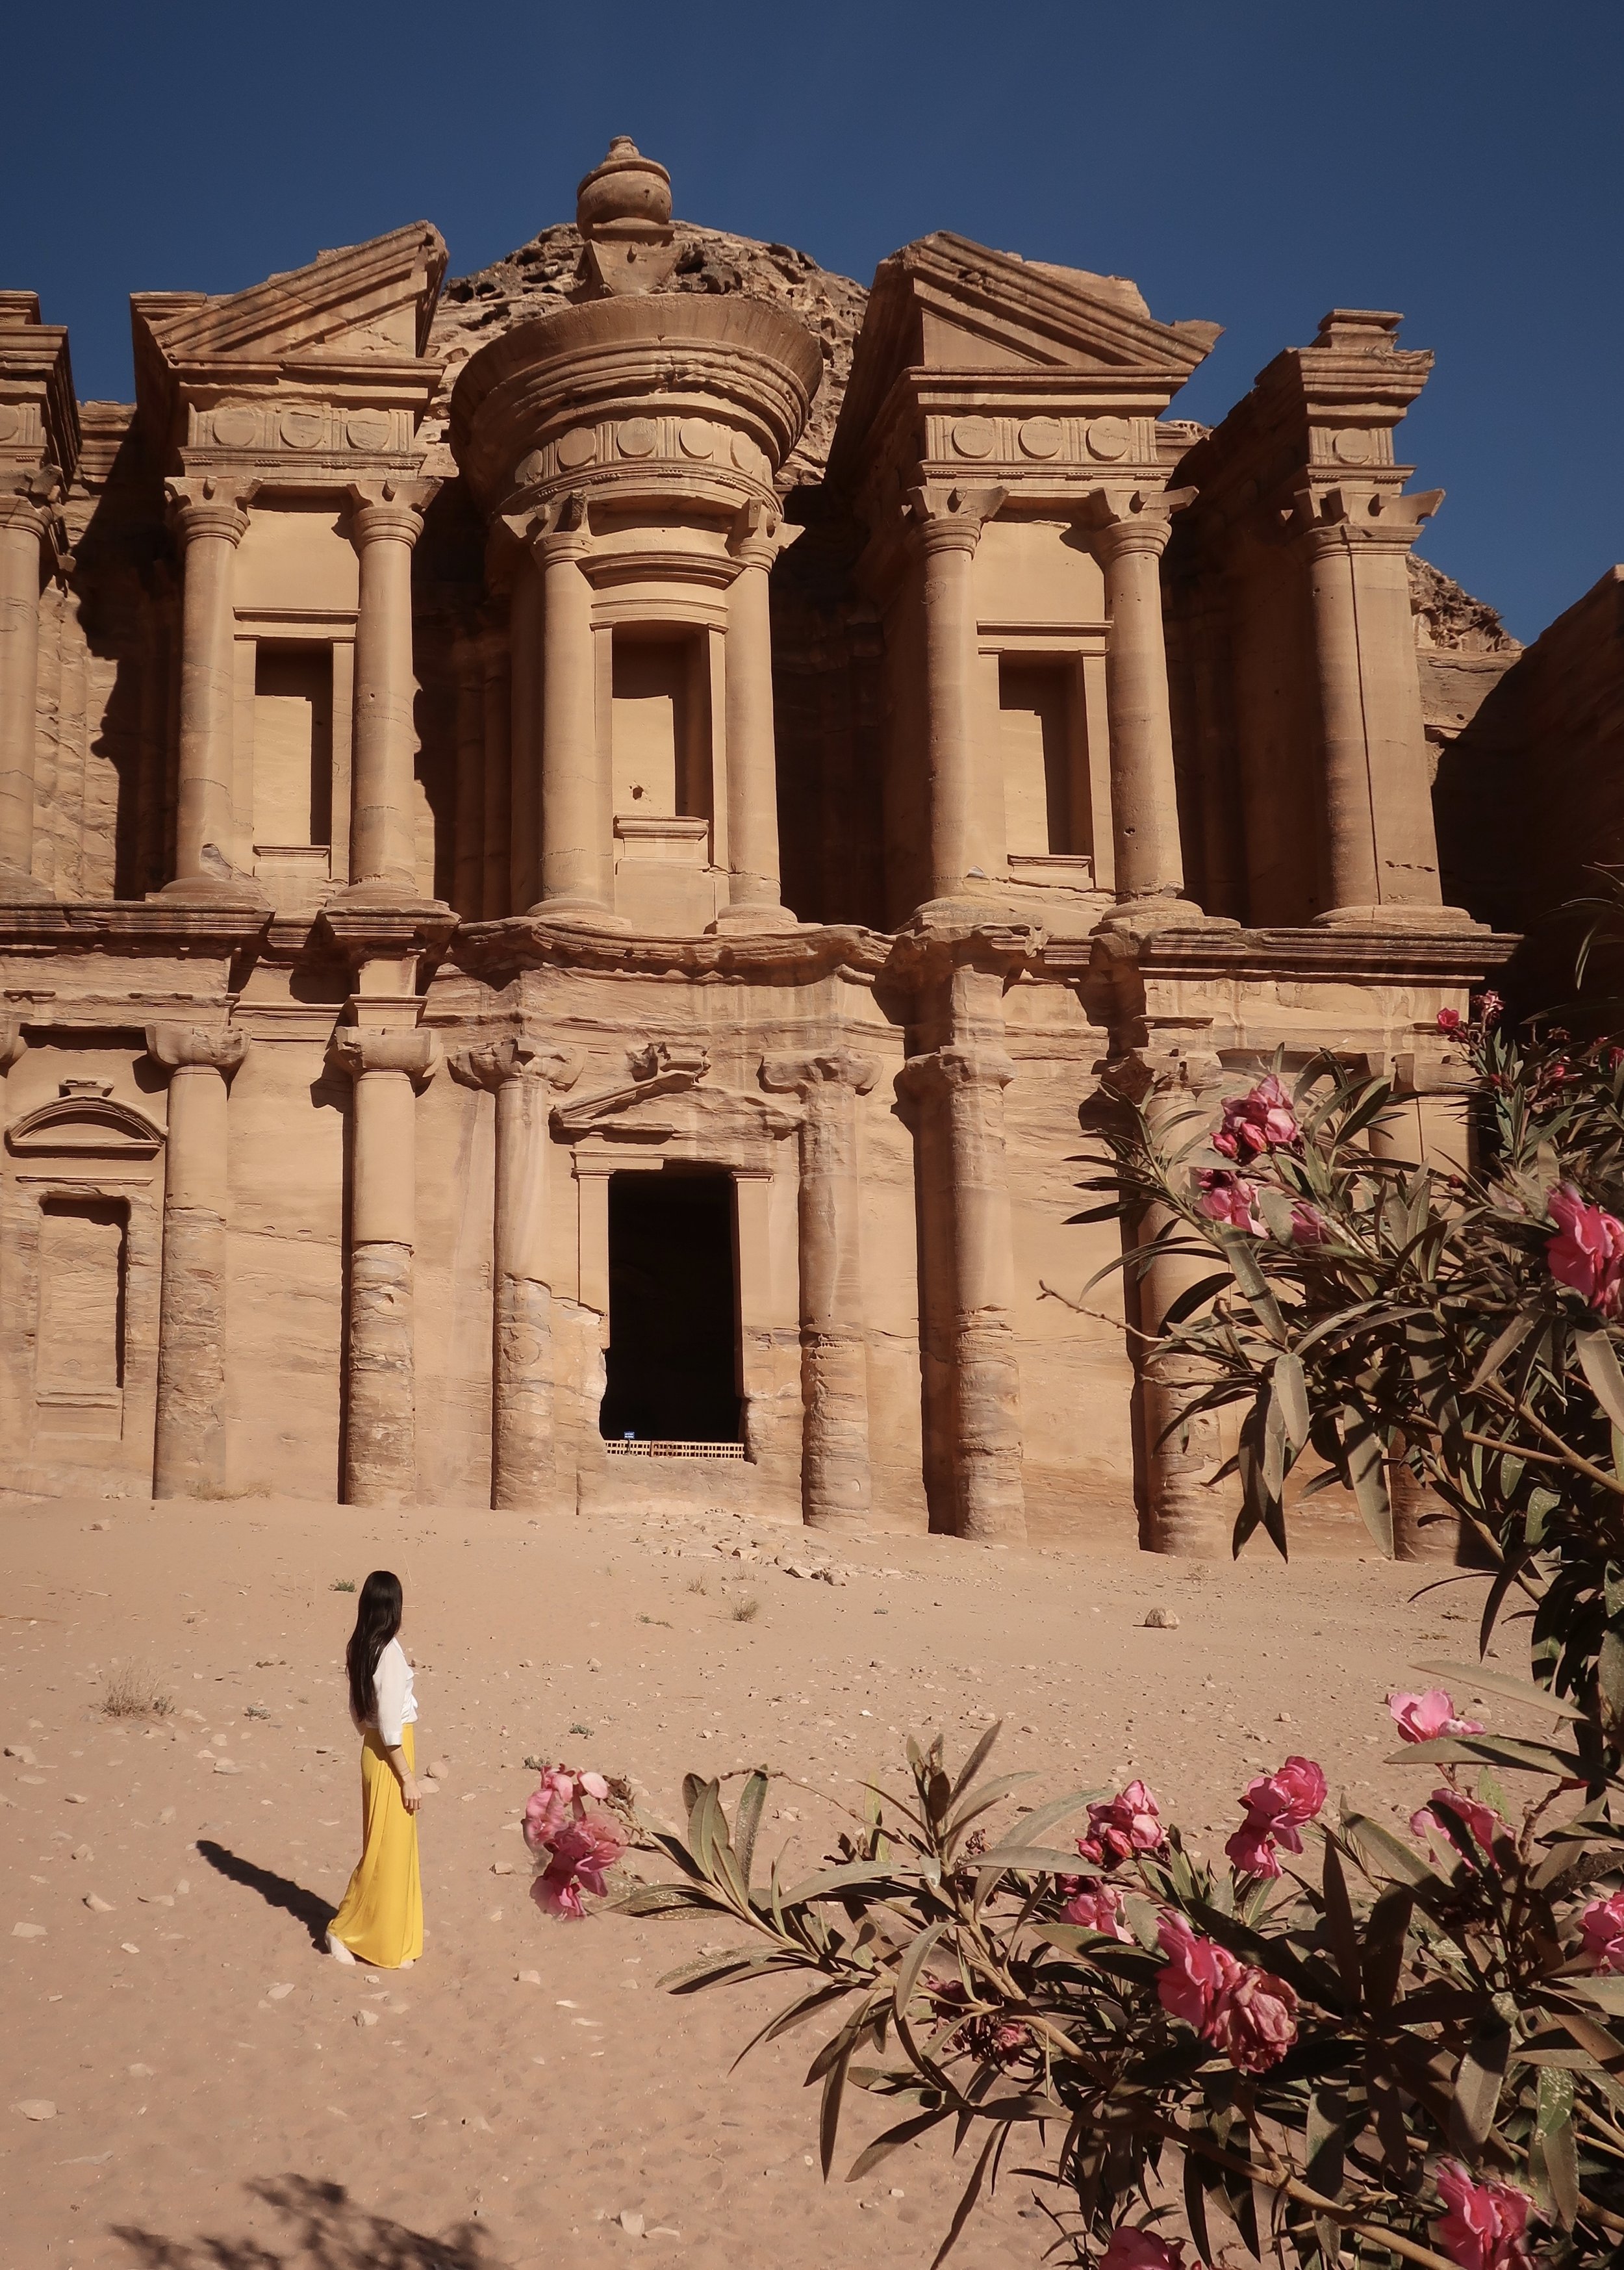 Intrepid Travel's Jordan Discovery Tour 